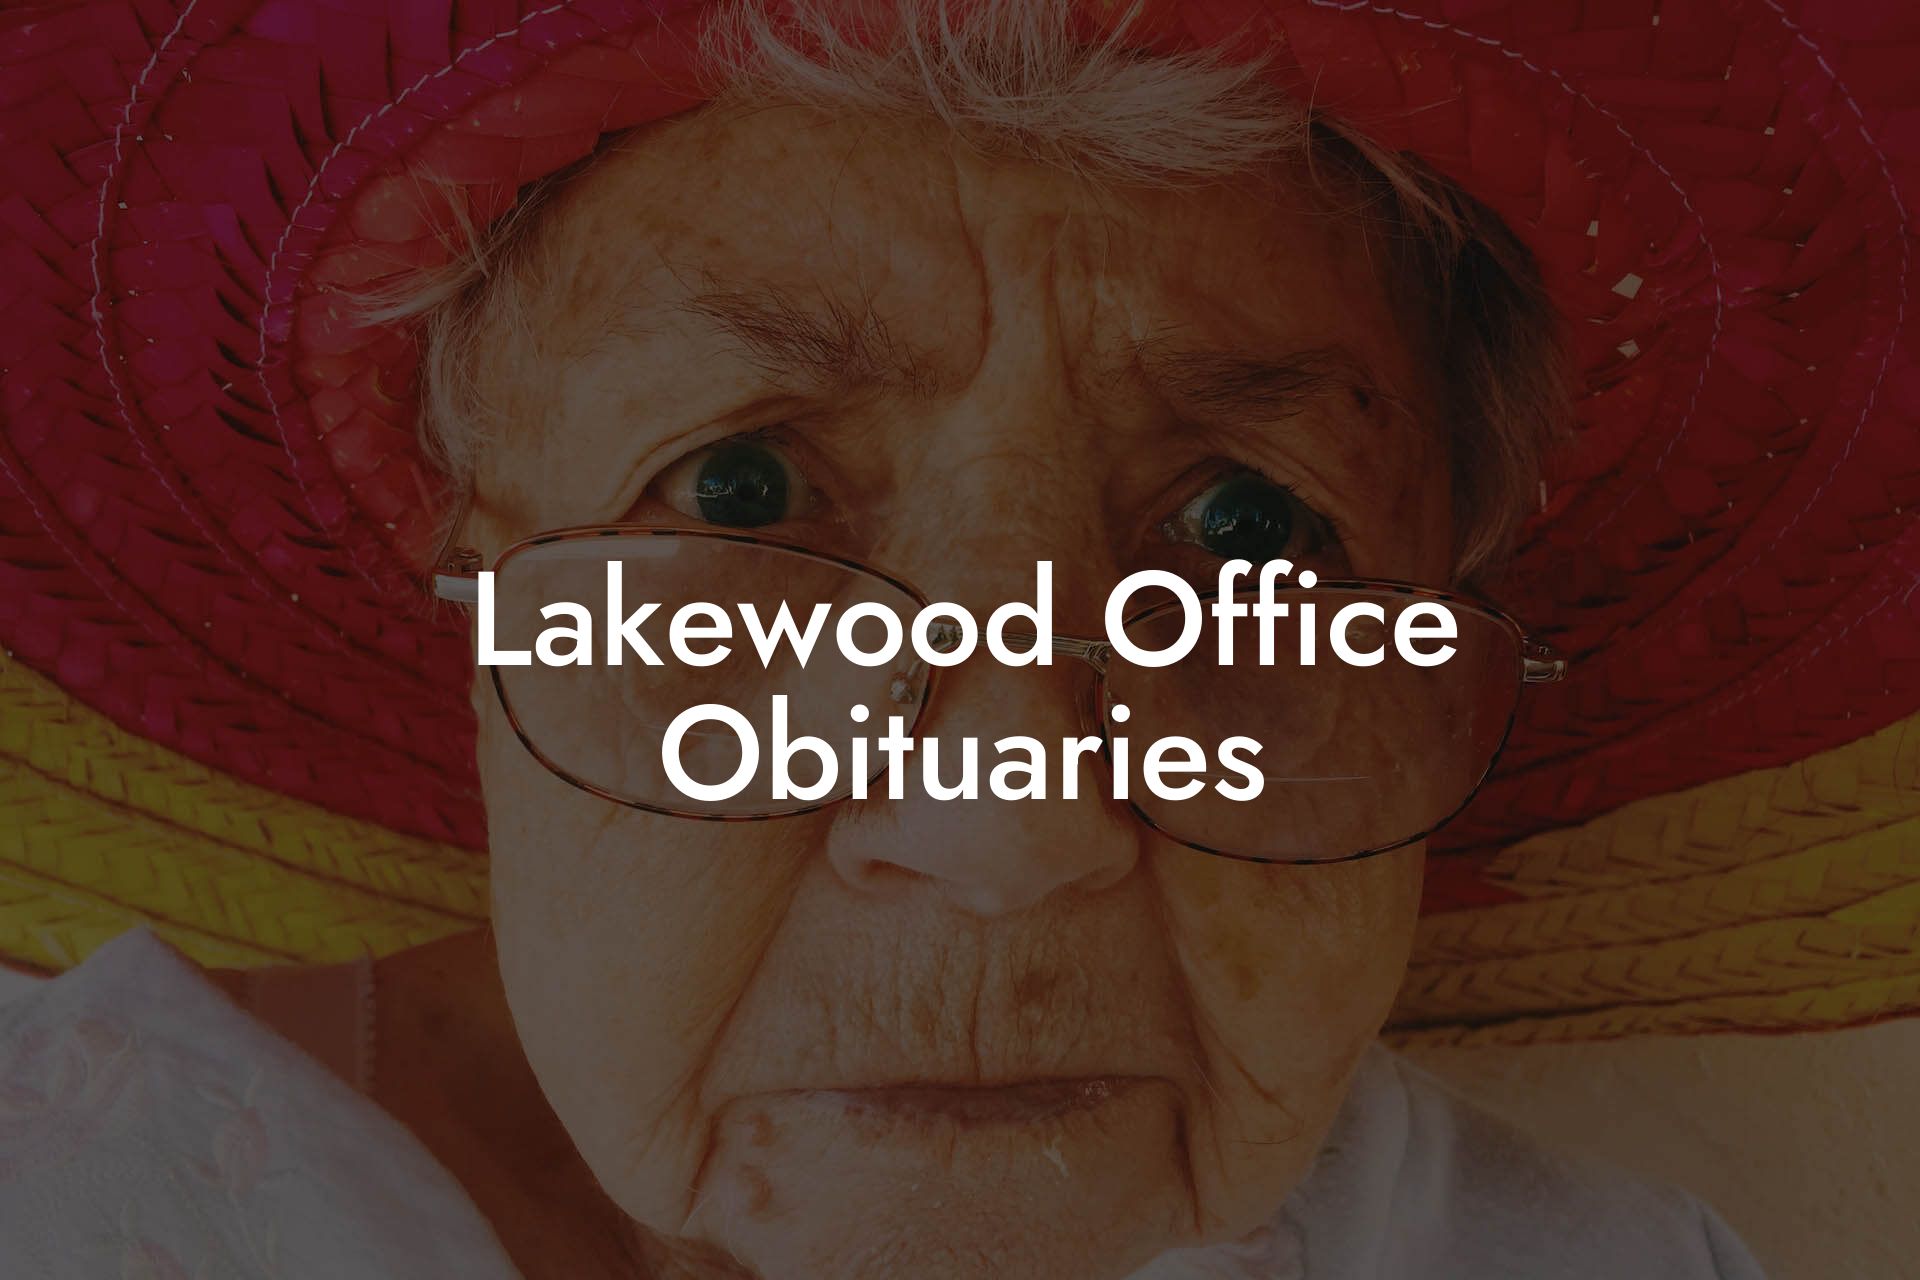 Lakewood Office Obituaries